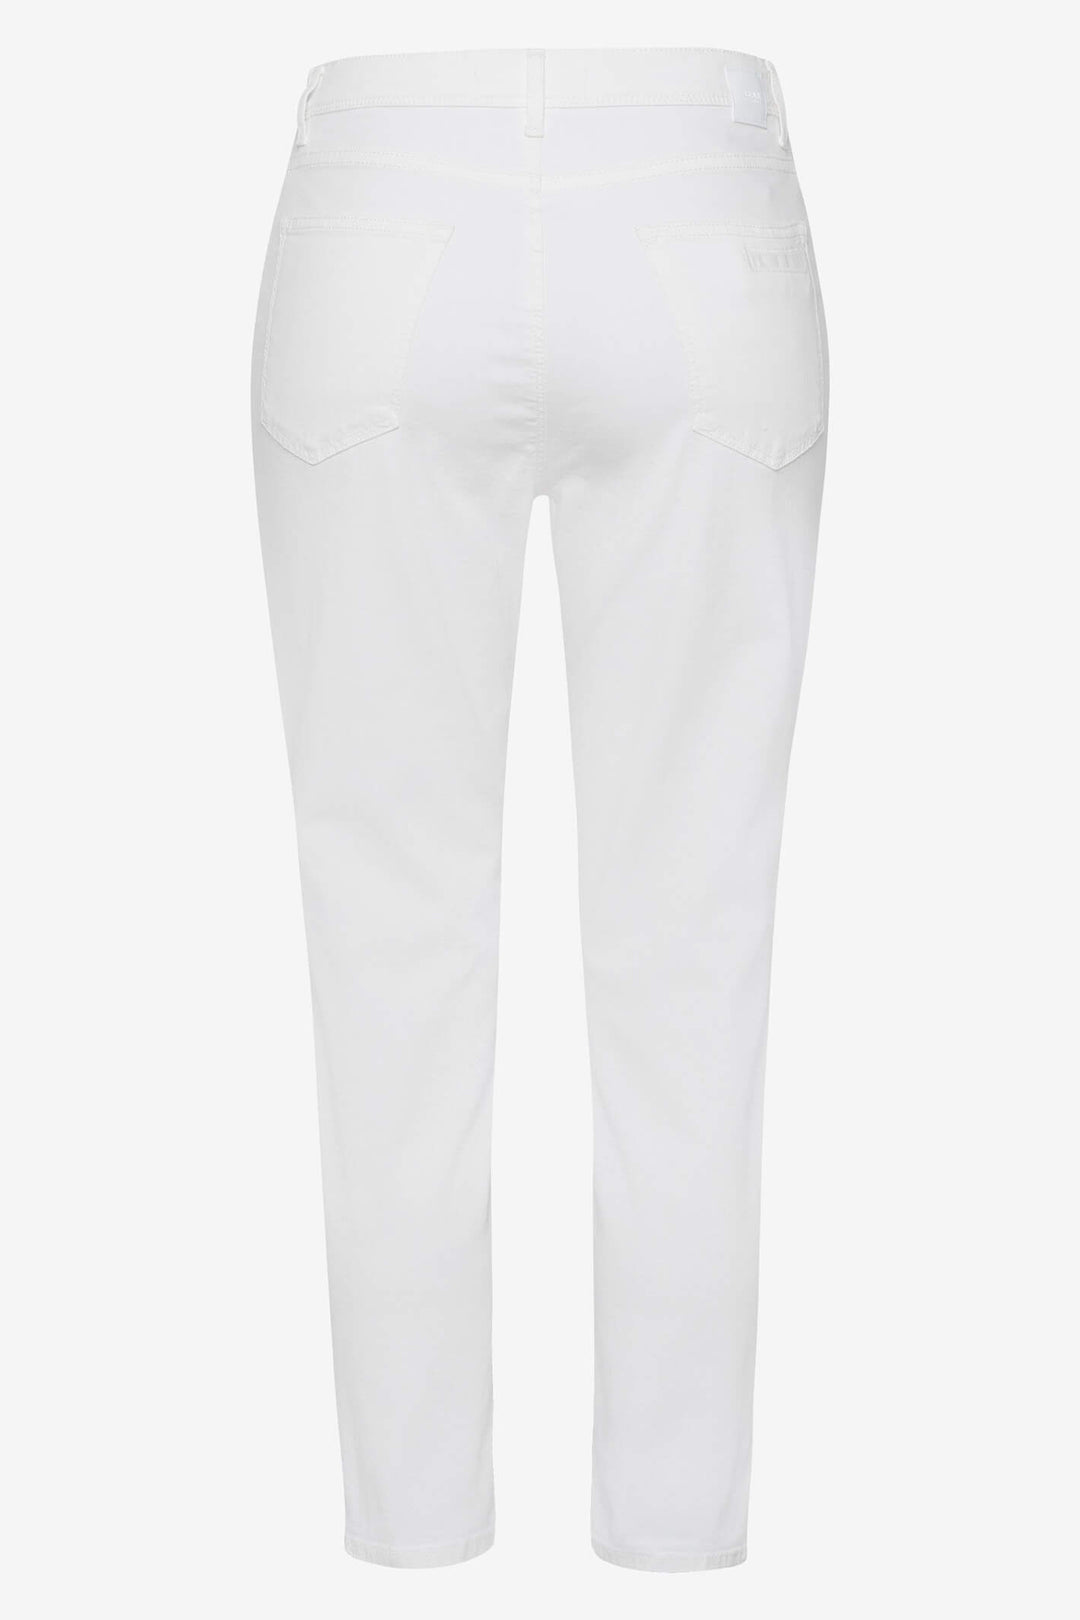 Brax Mary S 71-7558-99 White Denim Jeans - Olivia Grace Fashion